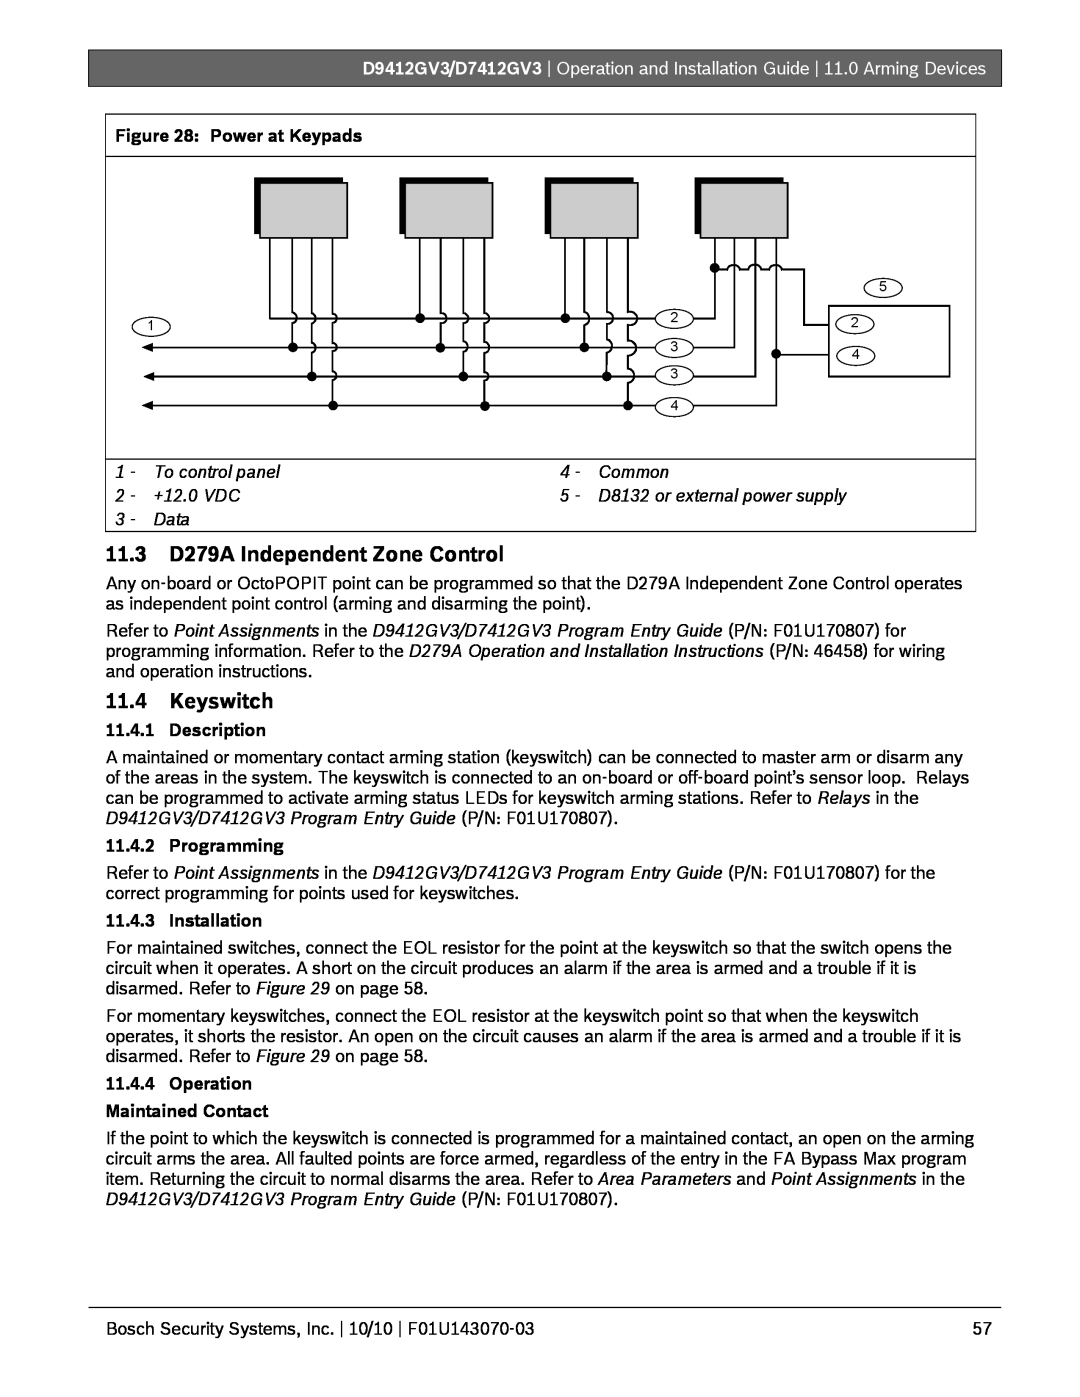 Bosch Appliances D7412GV3 11.3D279A Independent Zone Control, 11.4Keyswitch, Power at Keypads, Description, Programming 